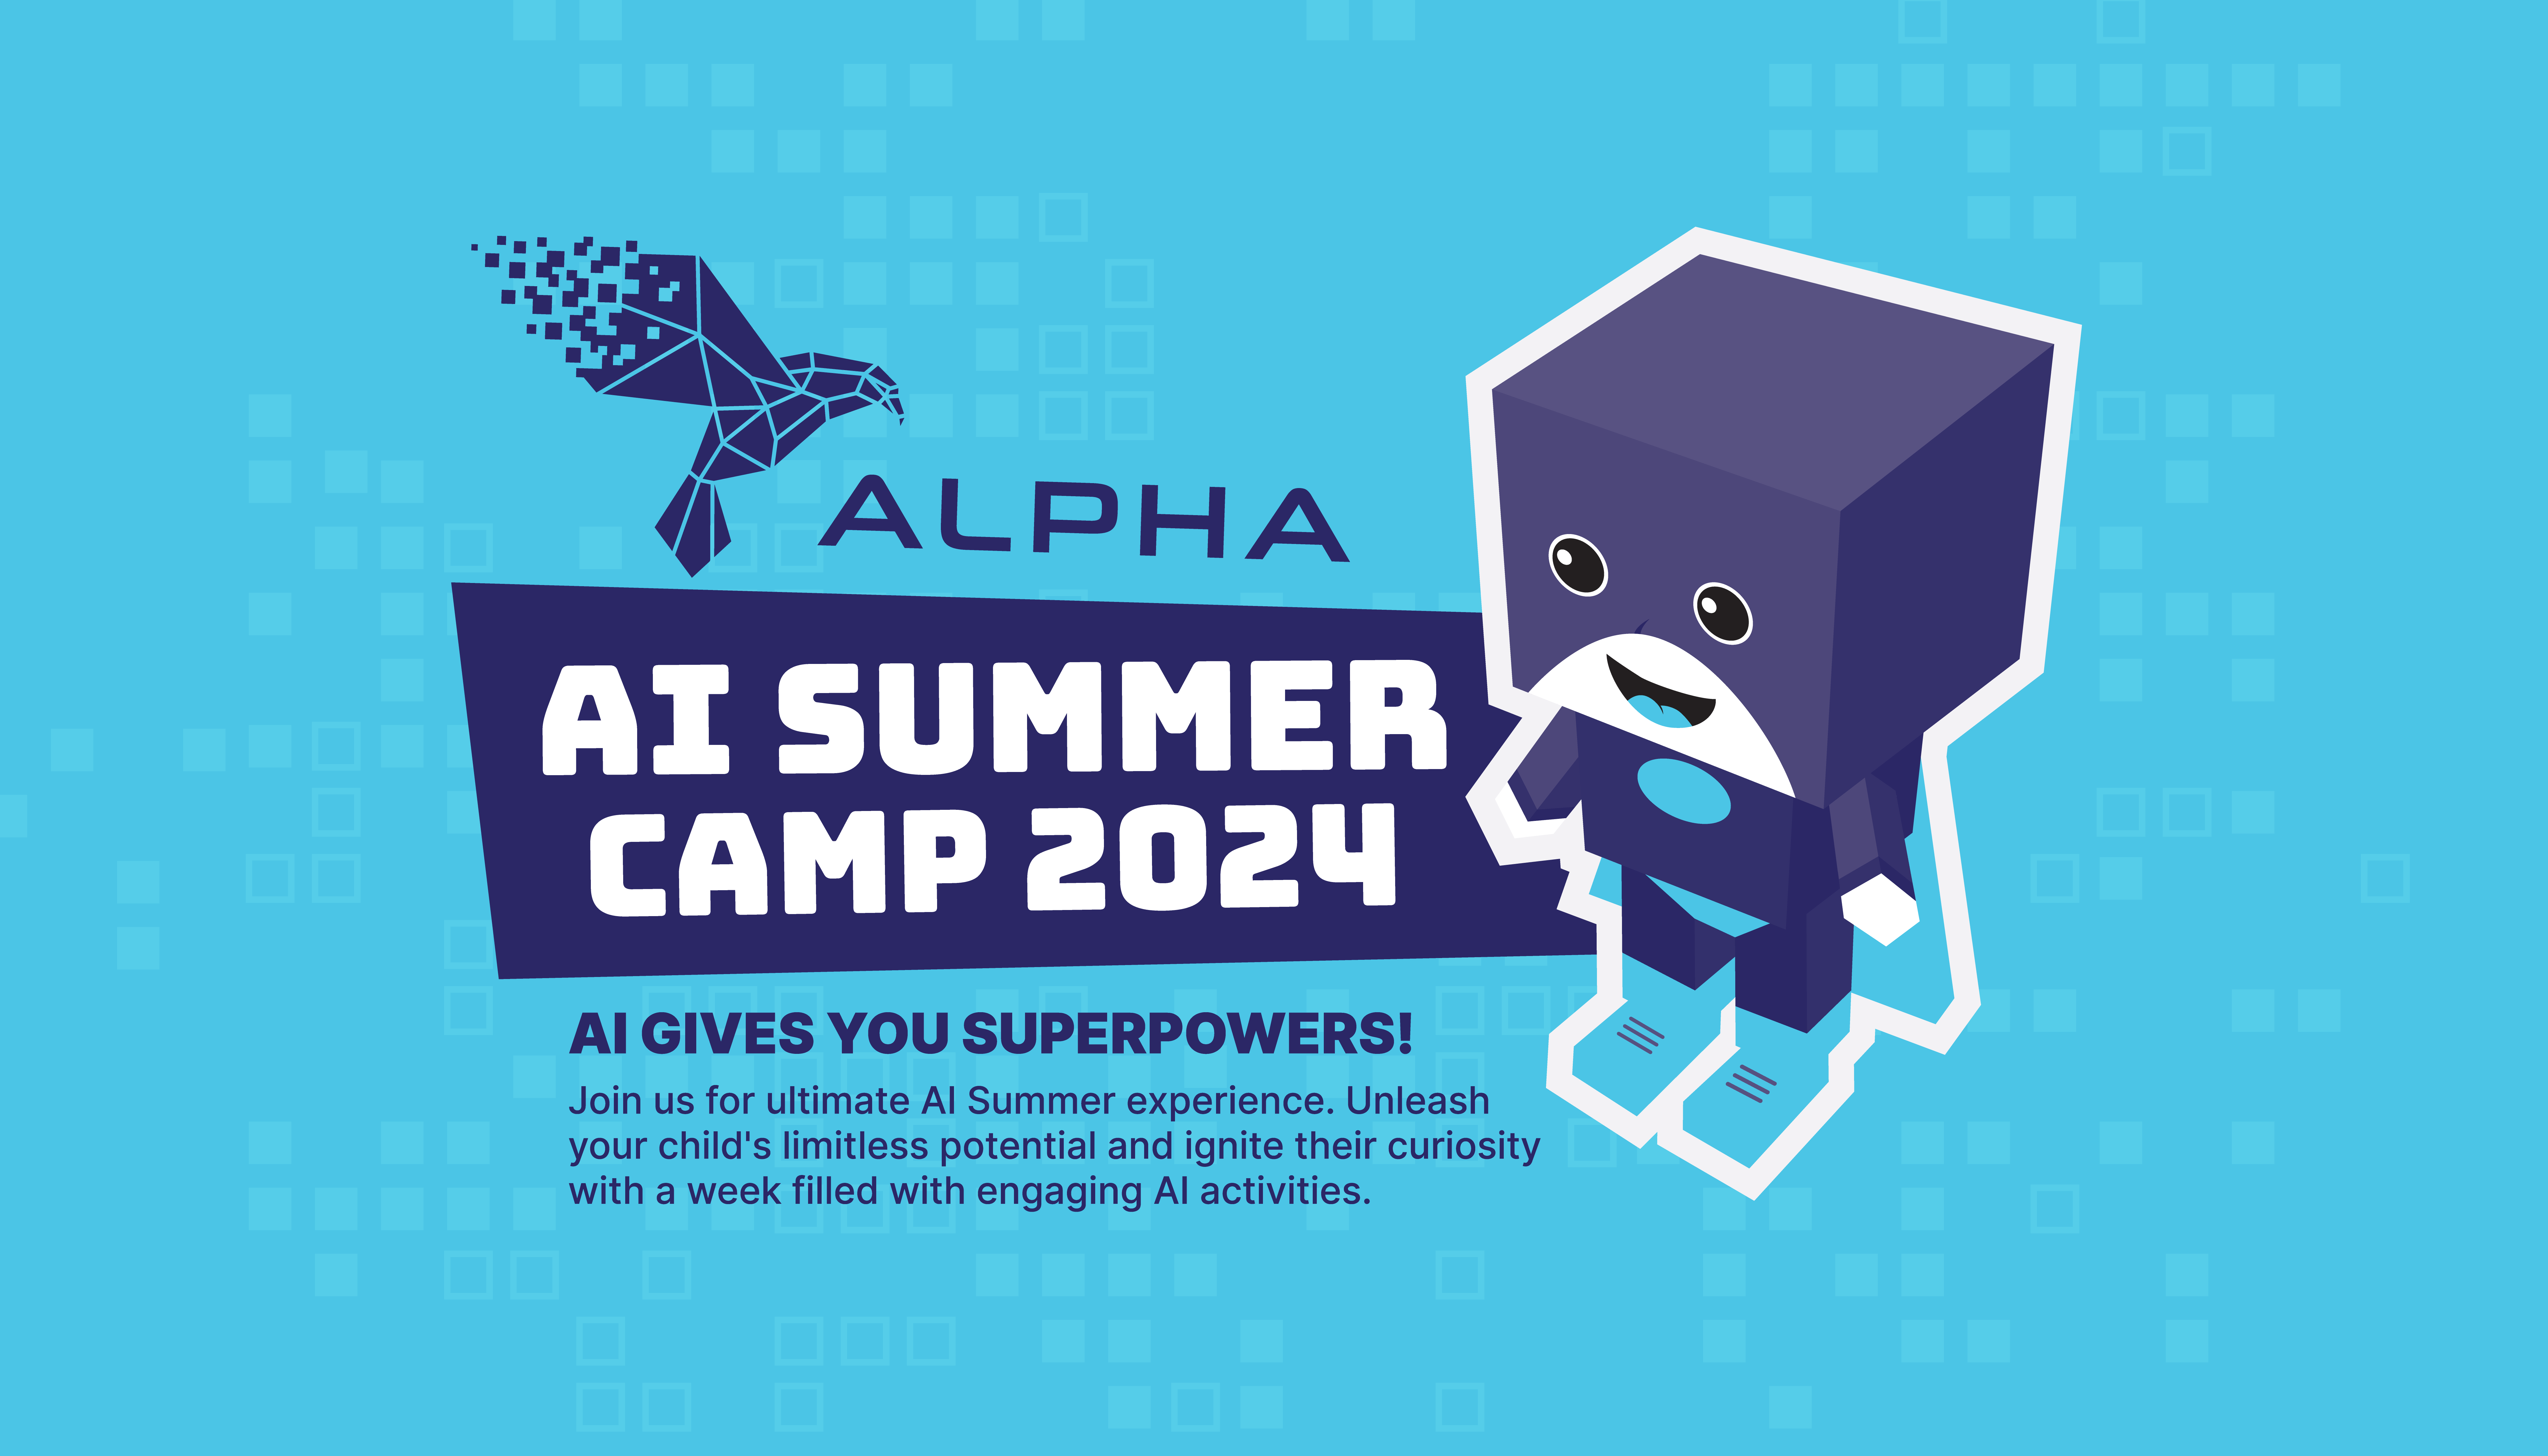 Alpha Camp